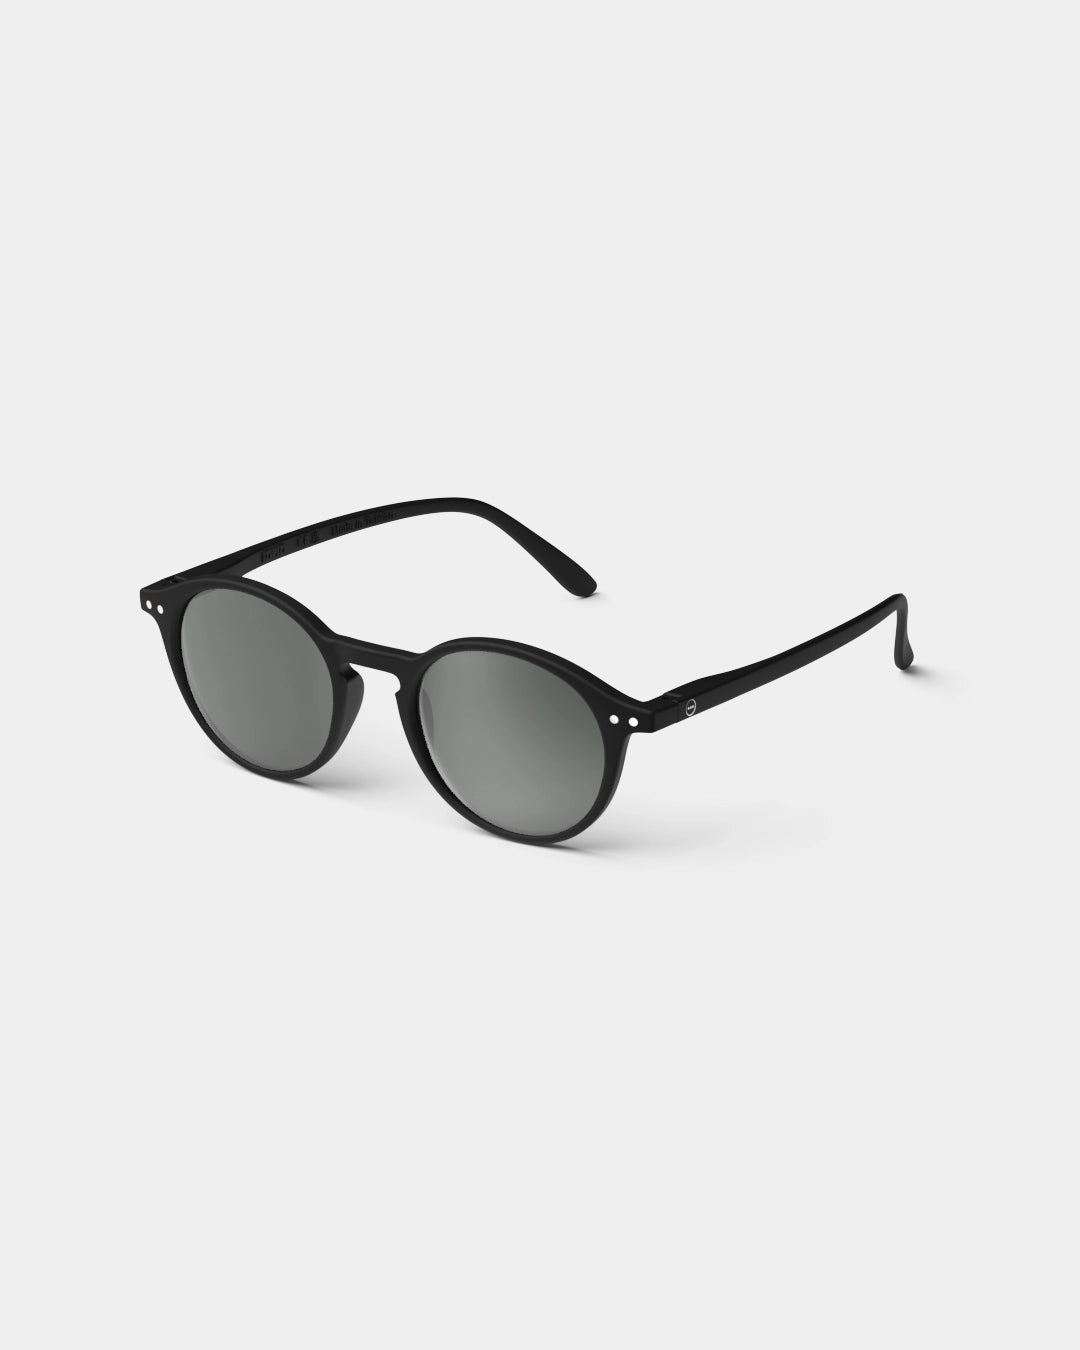 Unisex Reading Sunglasses - Style D - Black 2.0